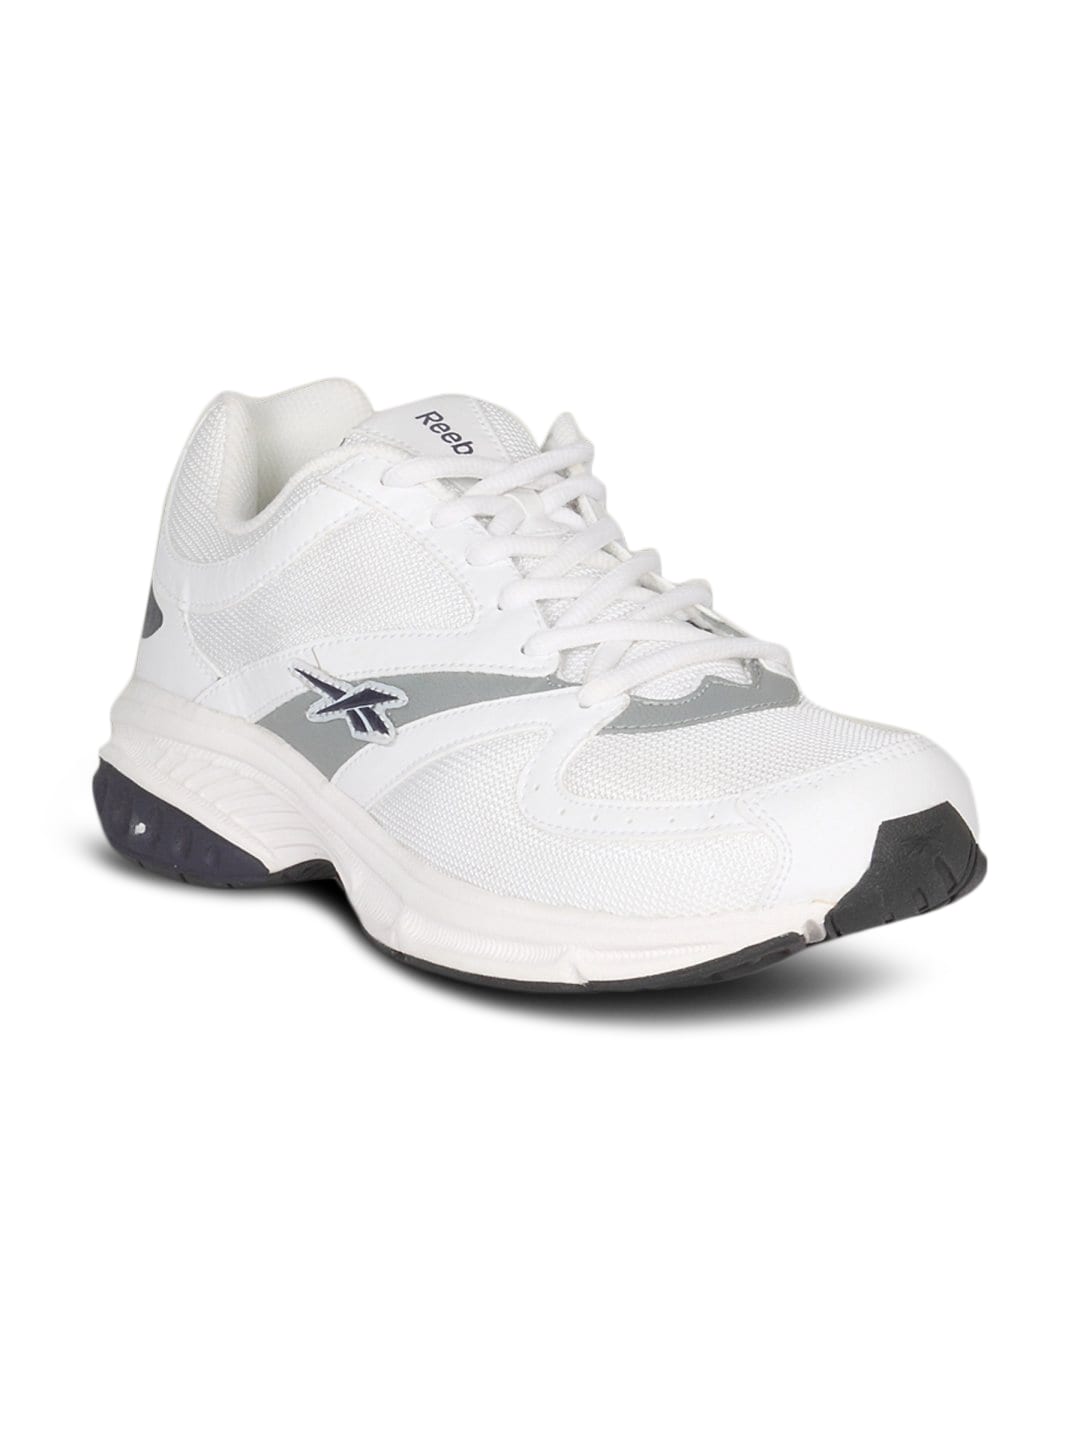 Reebok Men's Apex White Athletic Shoe